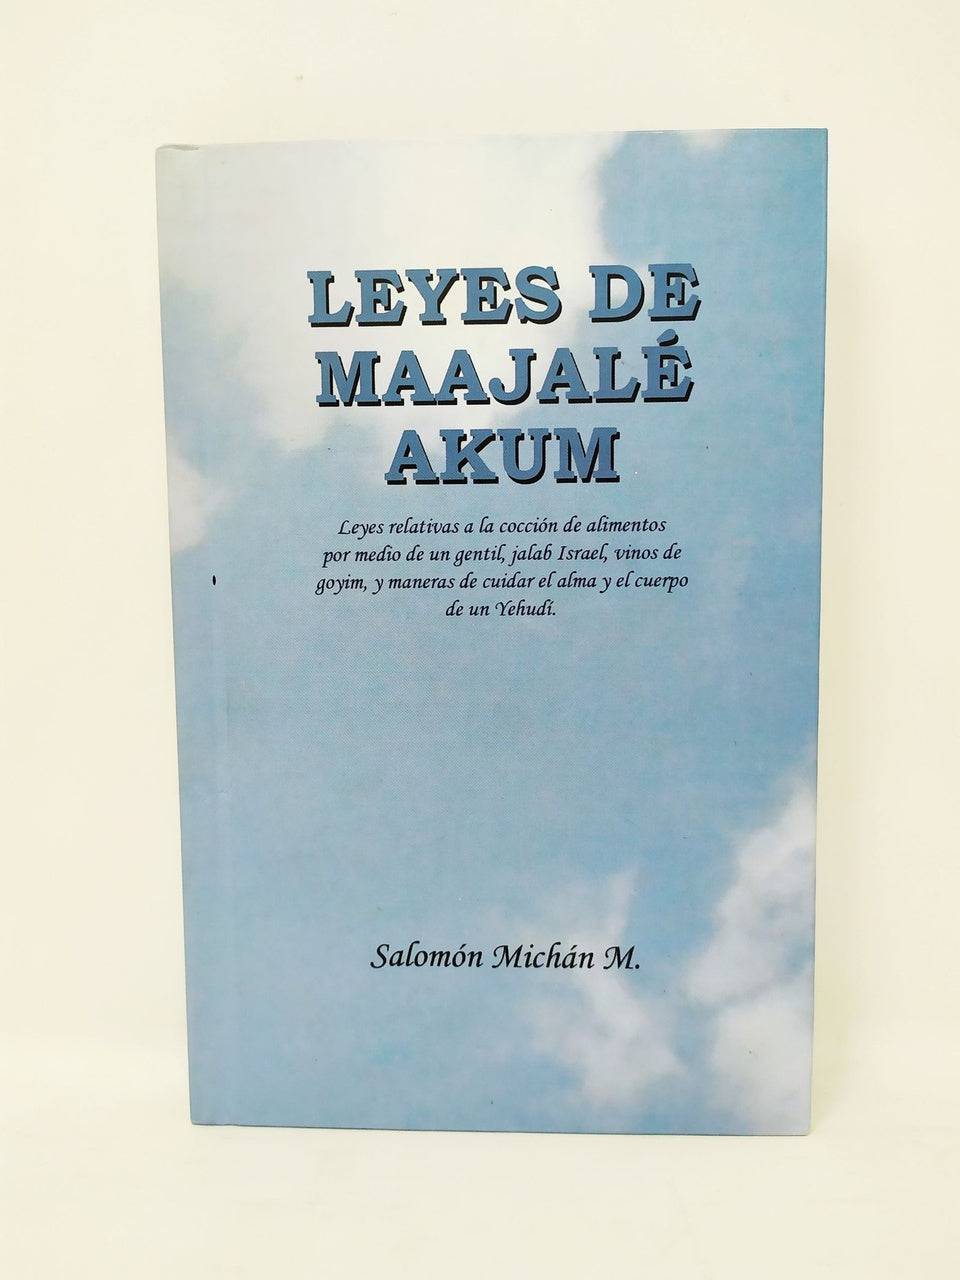 Leyes De Maajale Akum - Libreria Jerusalem Centro